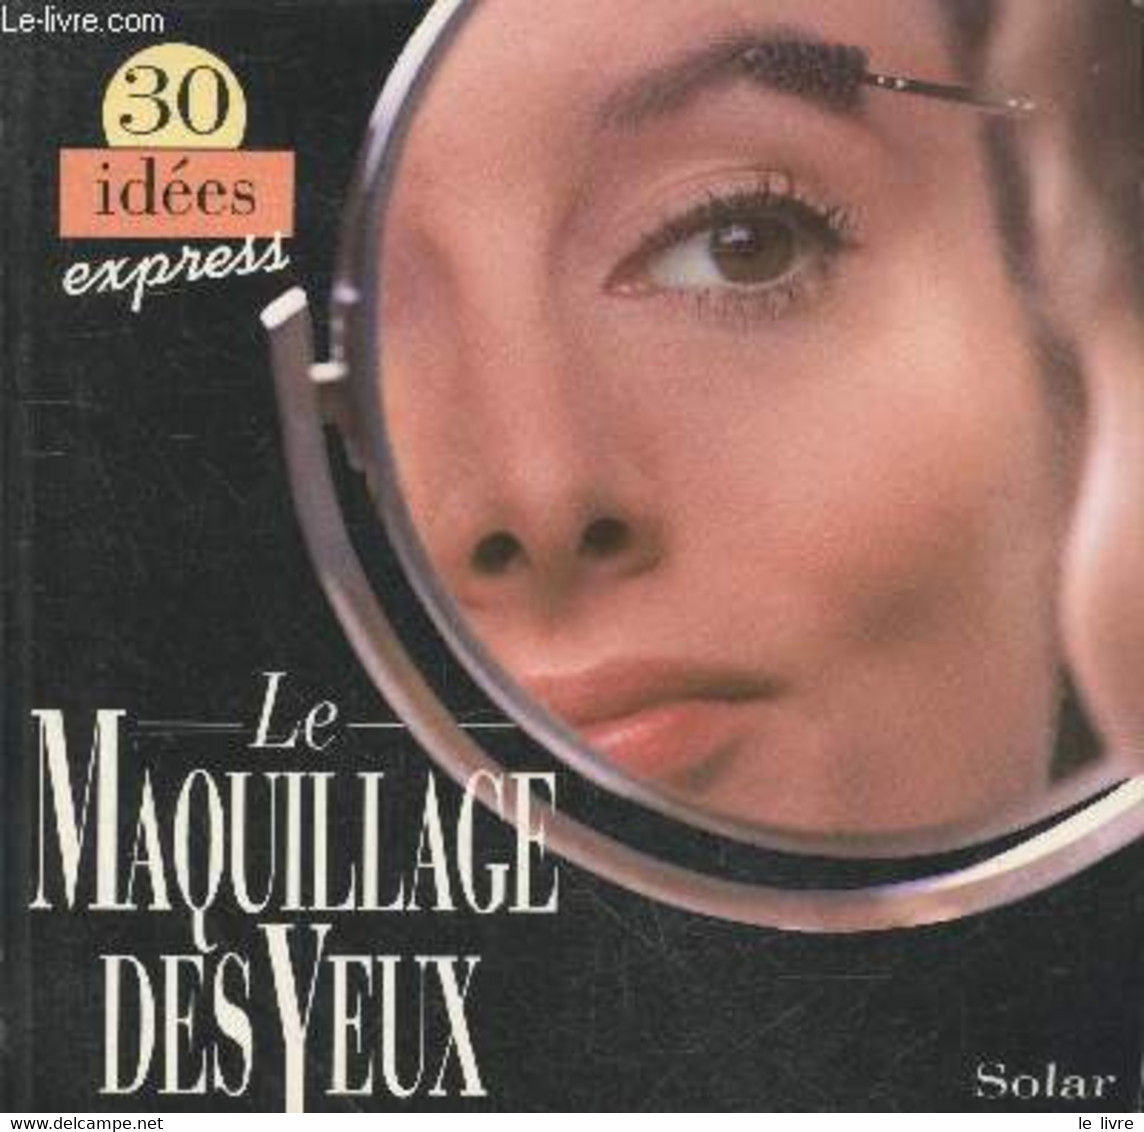 Le Maquillage Des Yeux (Collection "30 Idées Express") - Moodie Christine - 1994 - Books